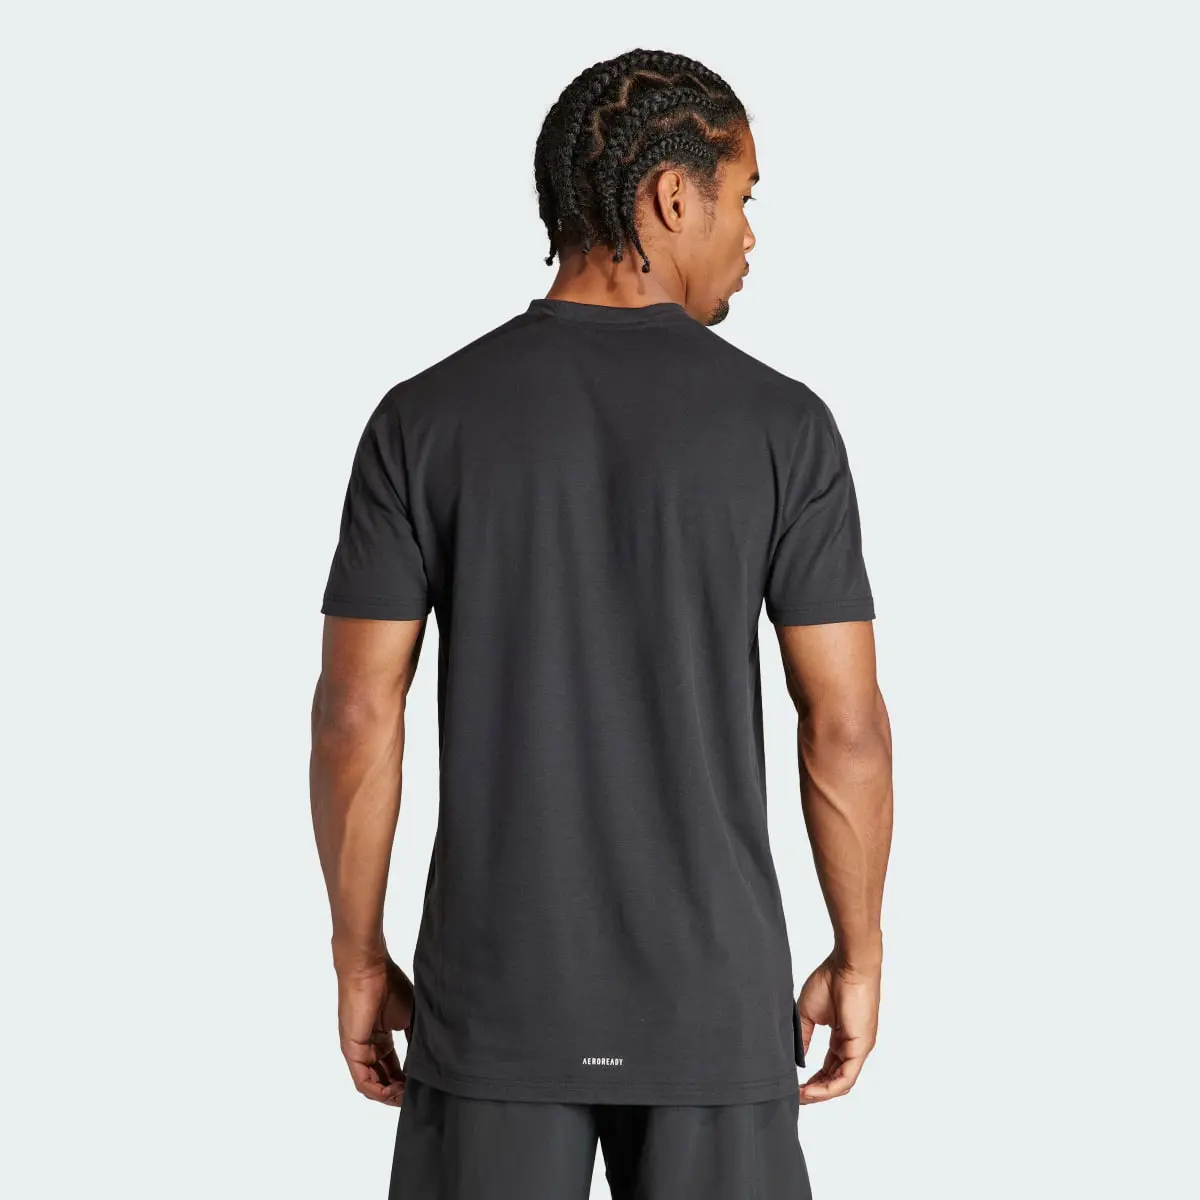 Adidas Designed for Training Workout T-Shirt. 3